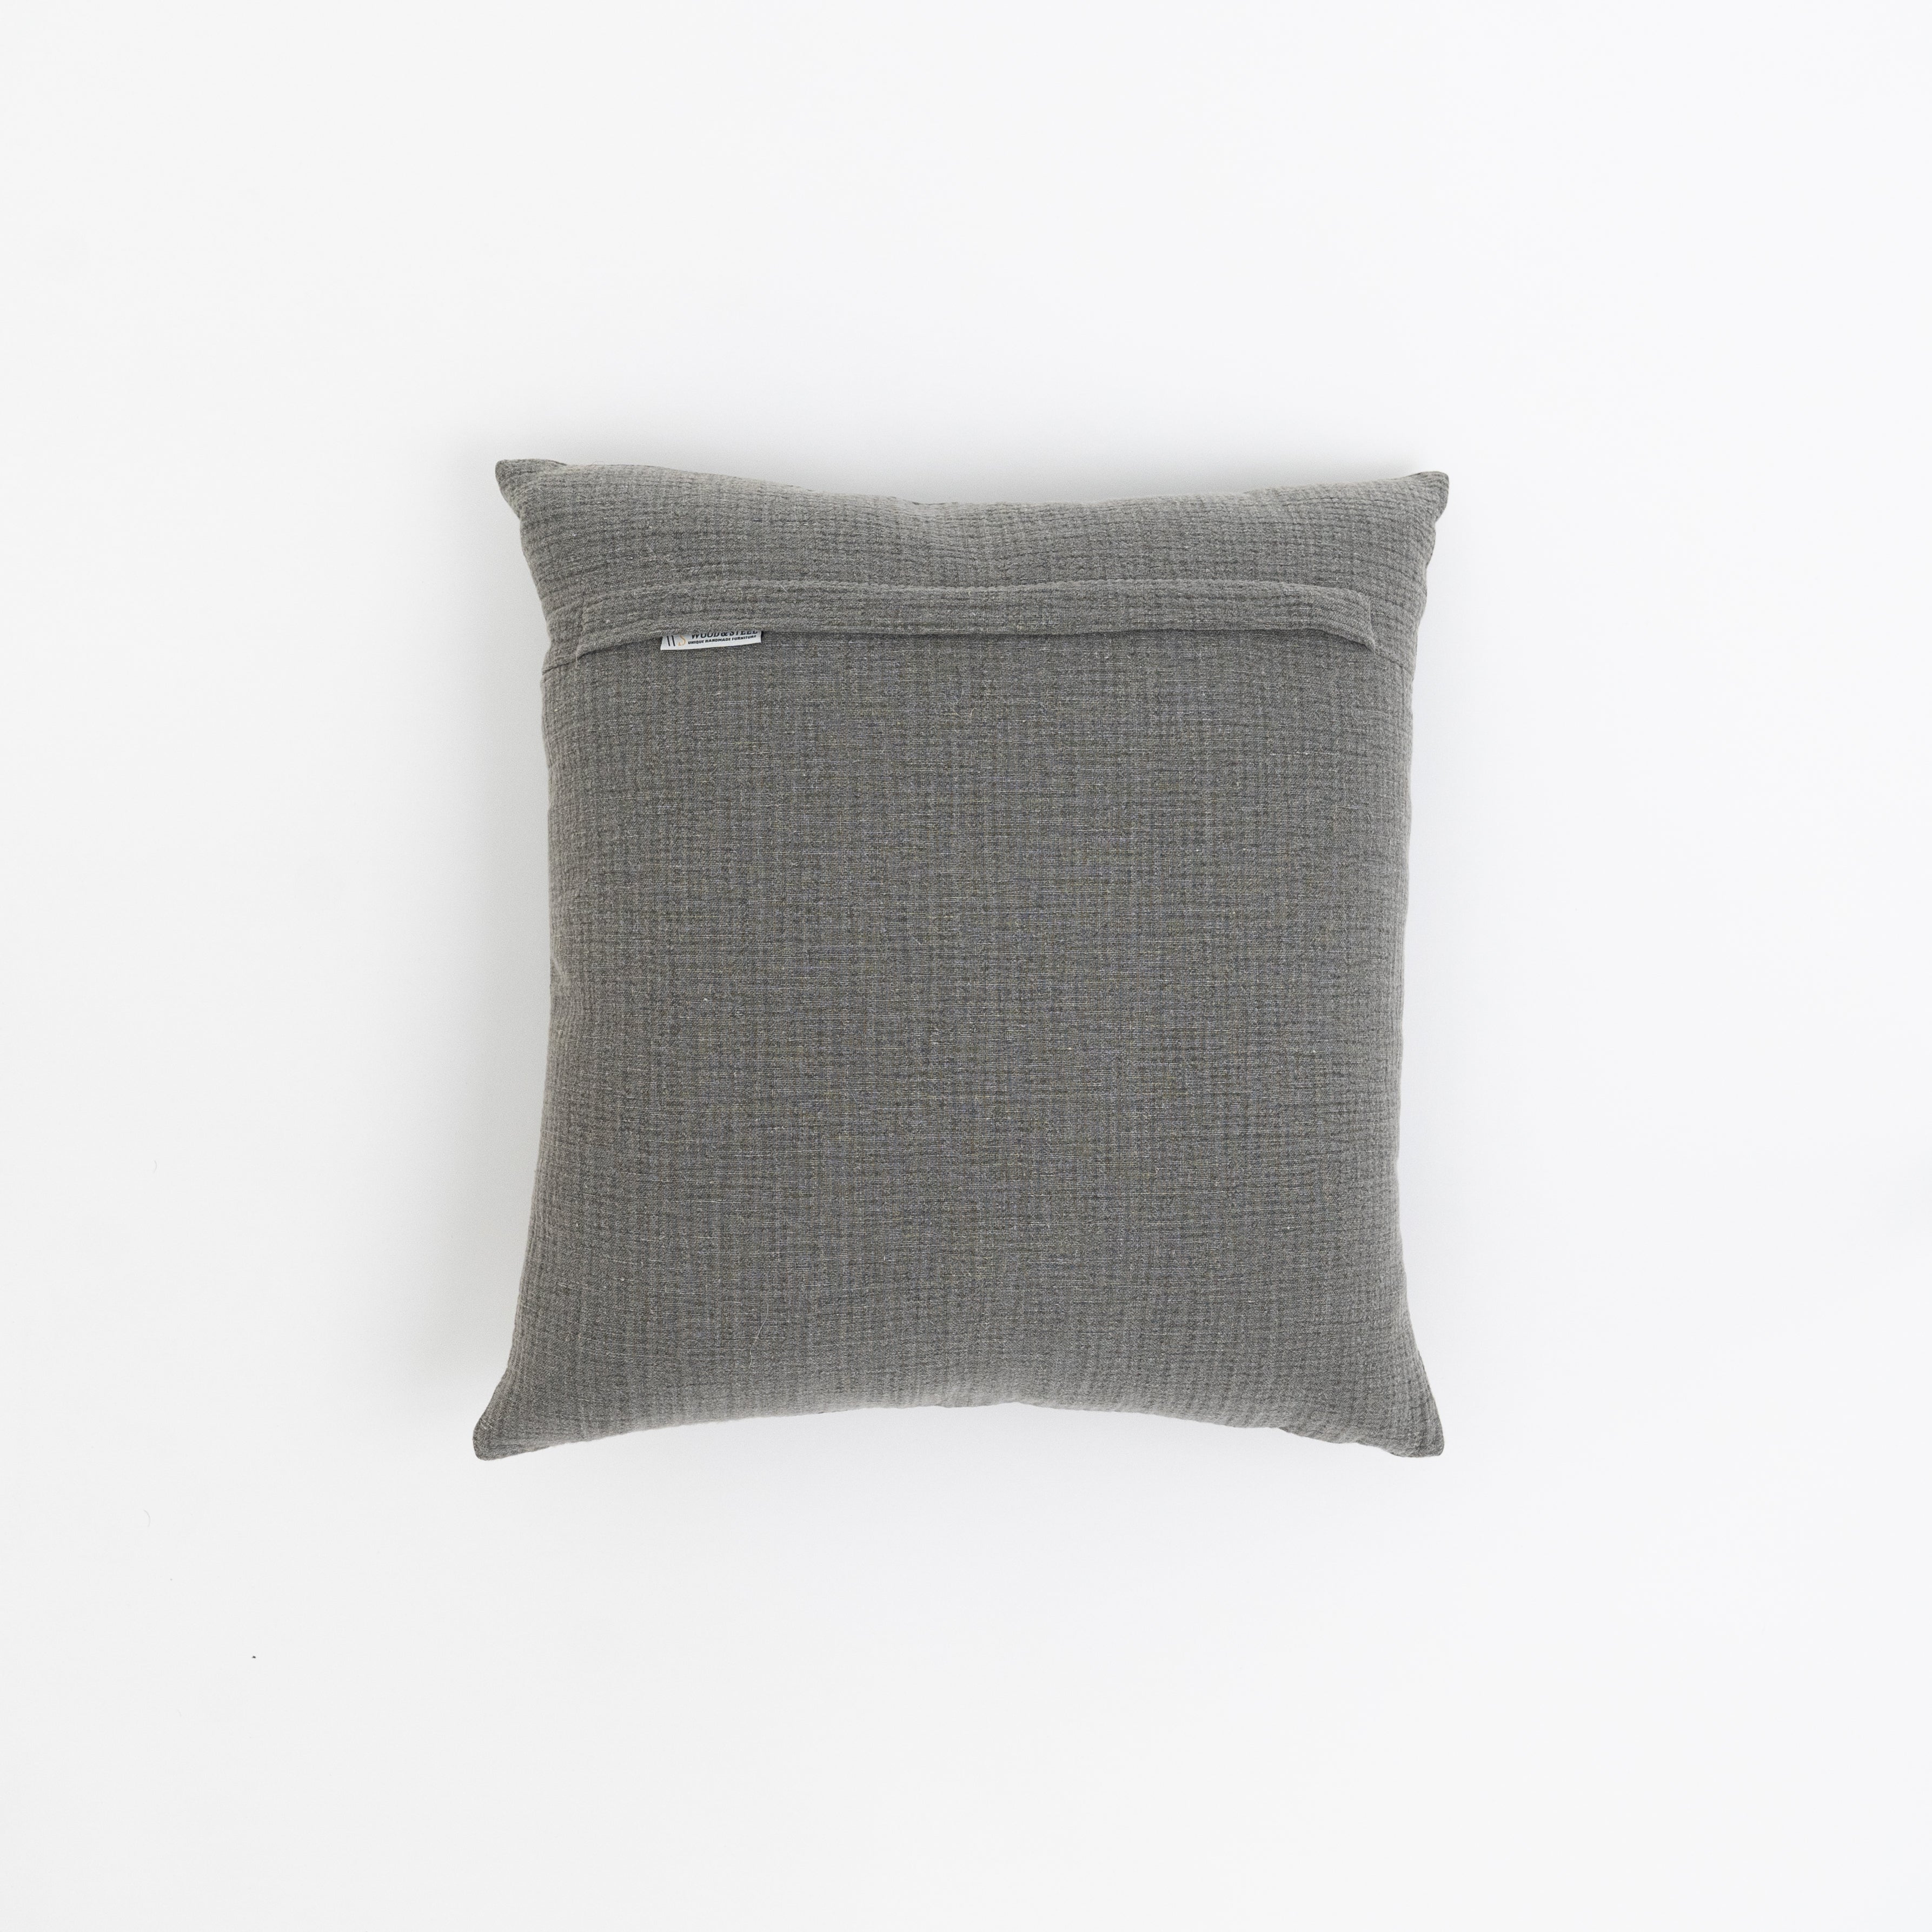 Cushion Cover Grey 45 x45cm  - WS Living - UAE - Cushions Wood and steel Furnitures - Dubai